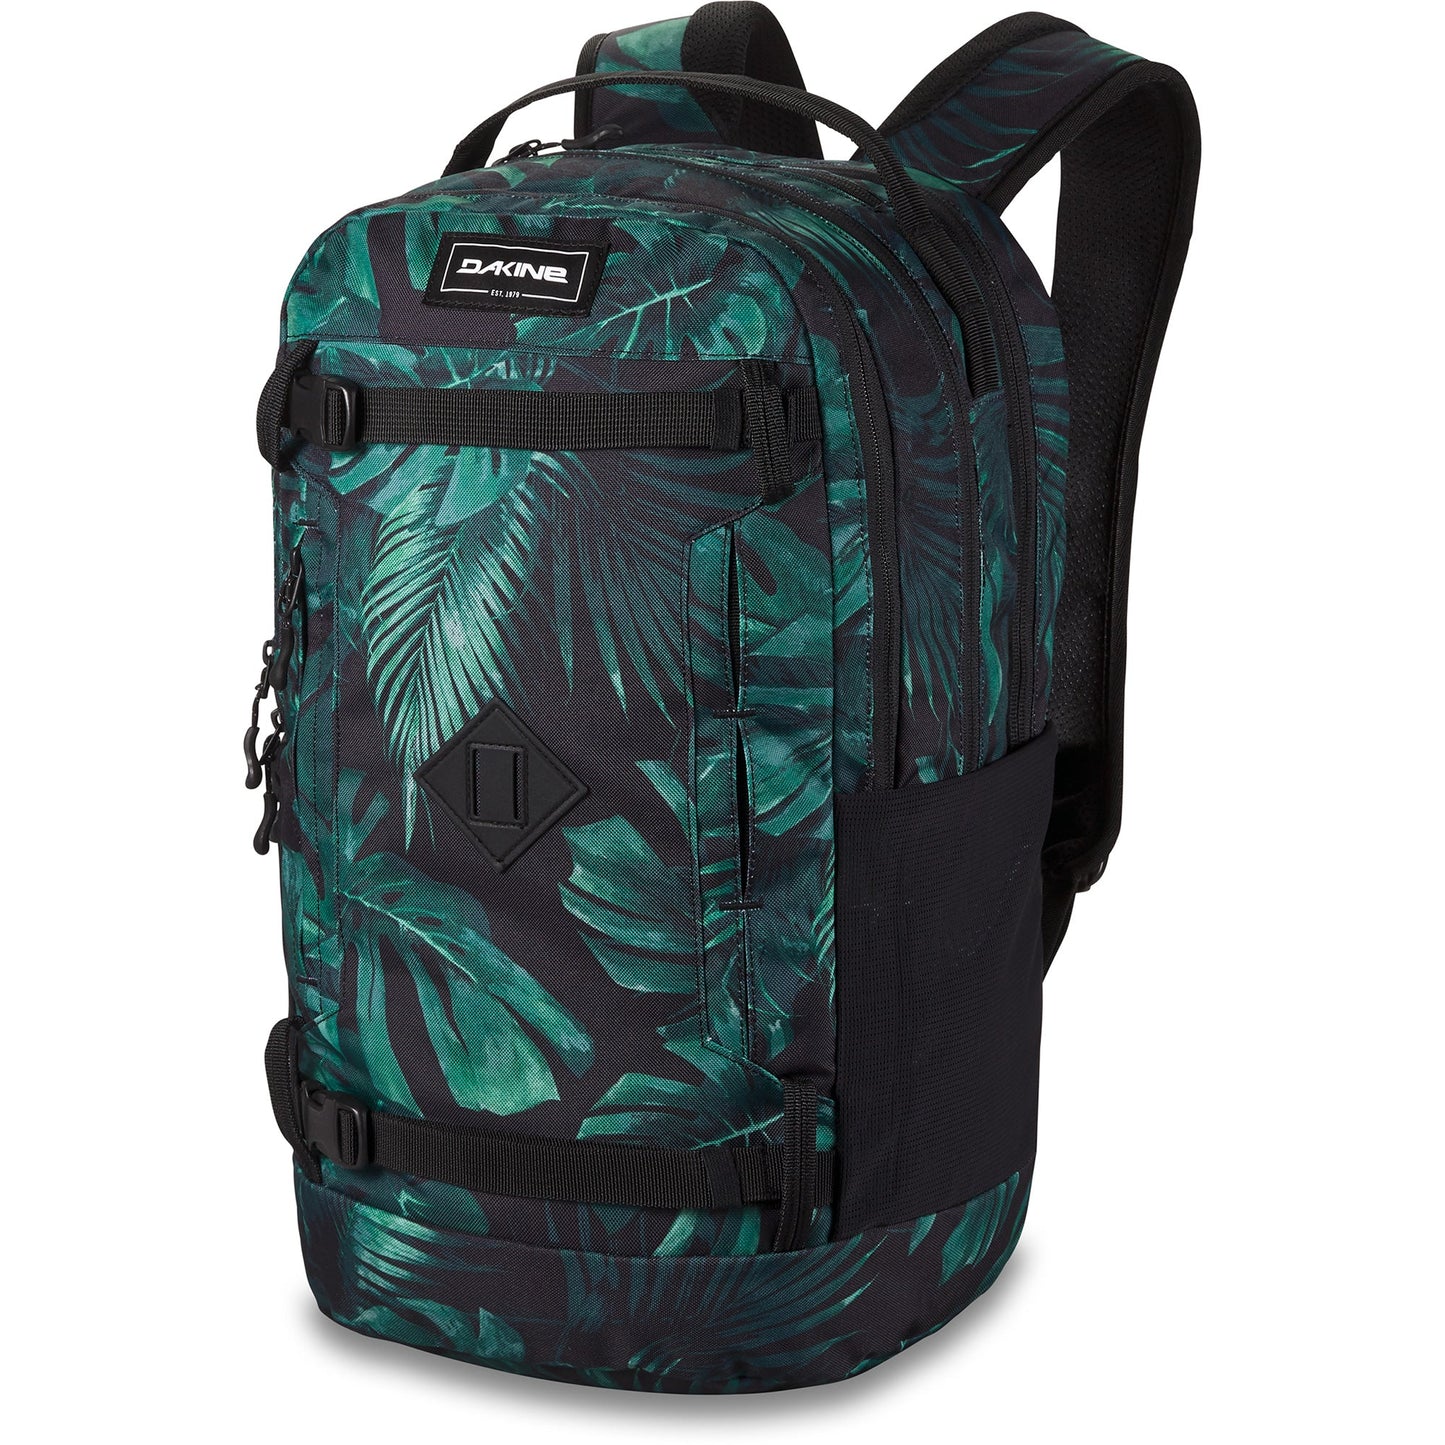 Urban Mission Pack Backpack SP23